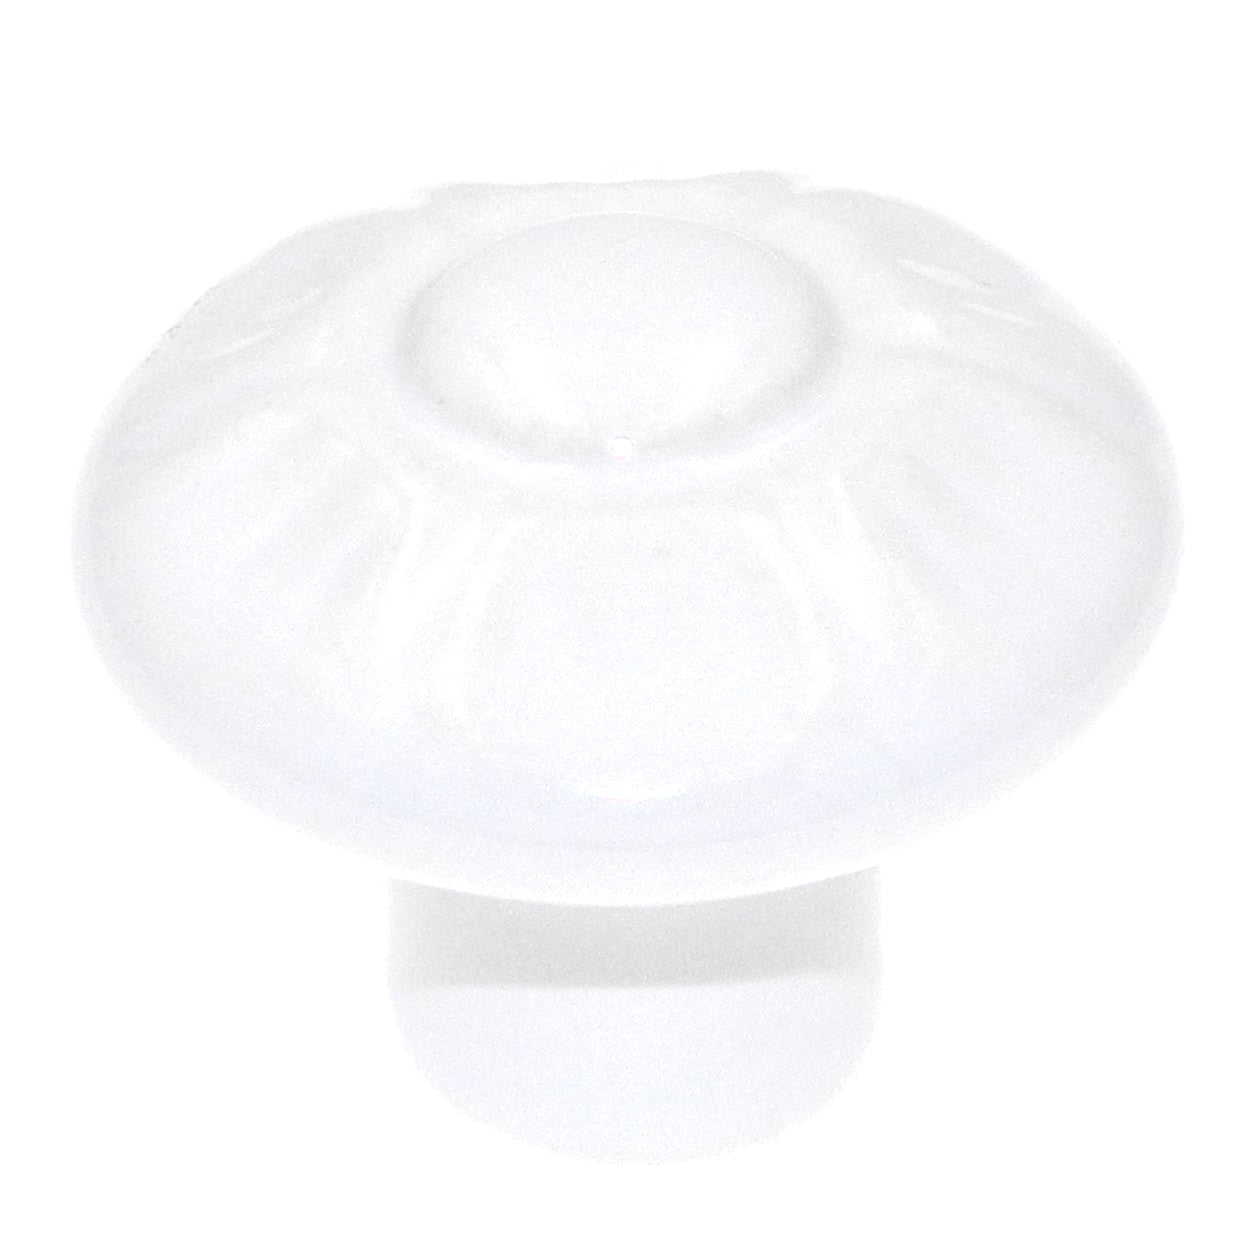 Amerock Hardware BP1320-W White 1 3/8" Ceramic Cabinet Knob Pull